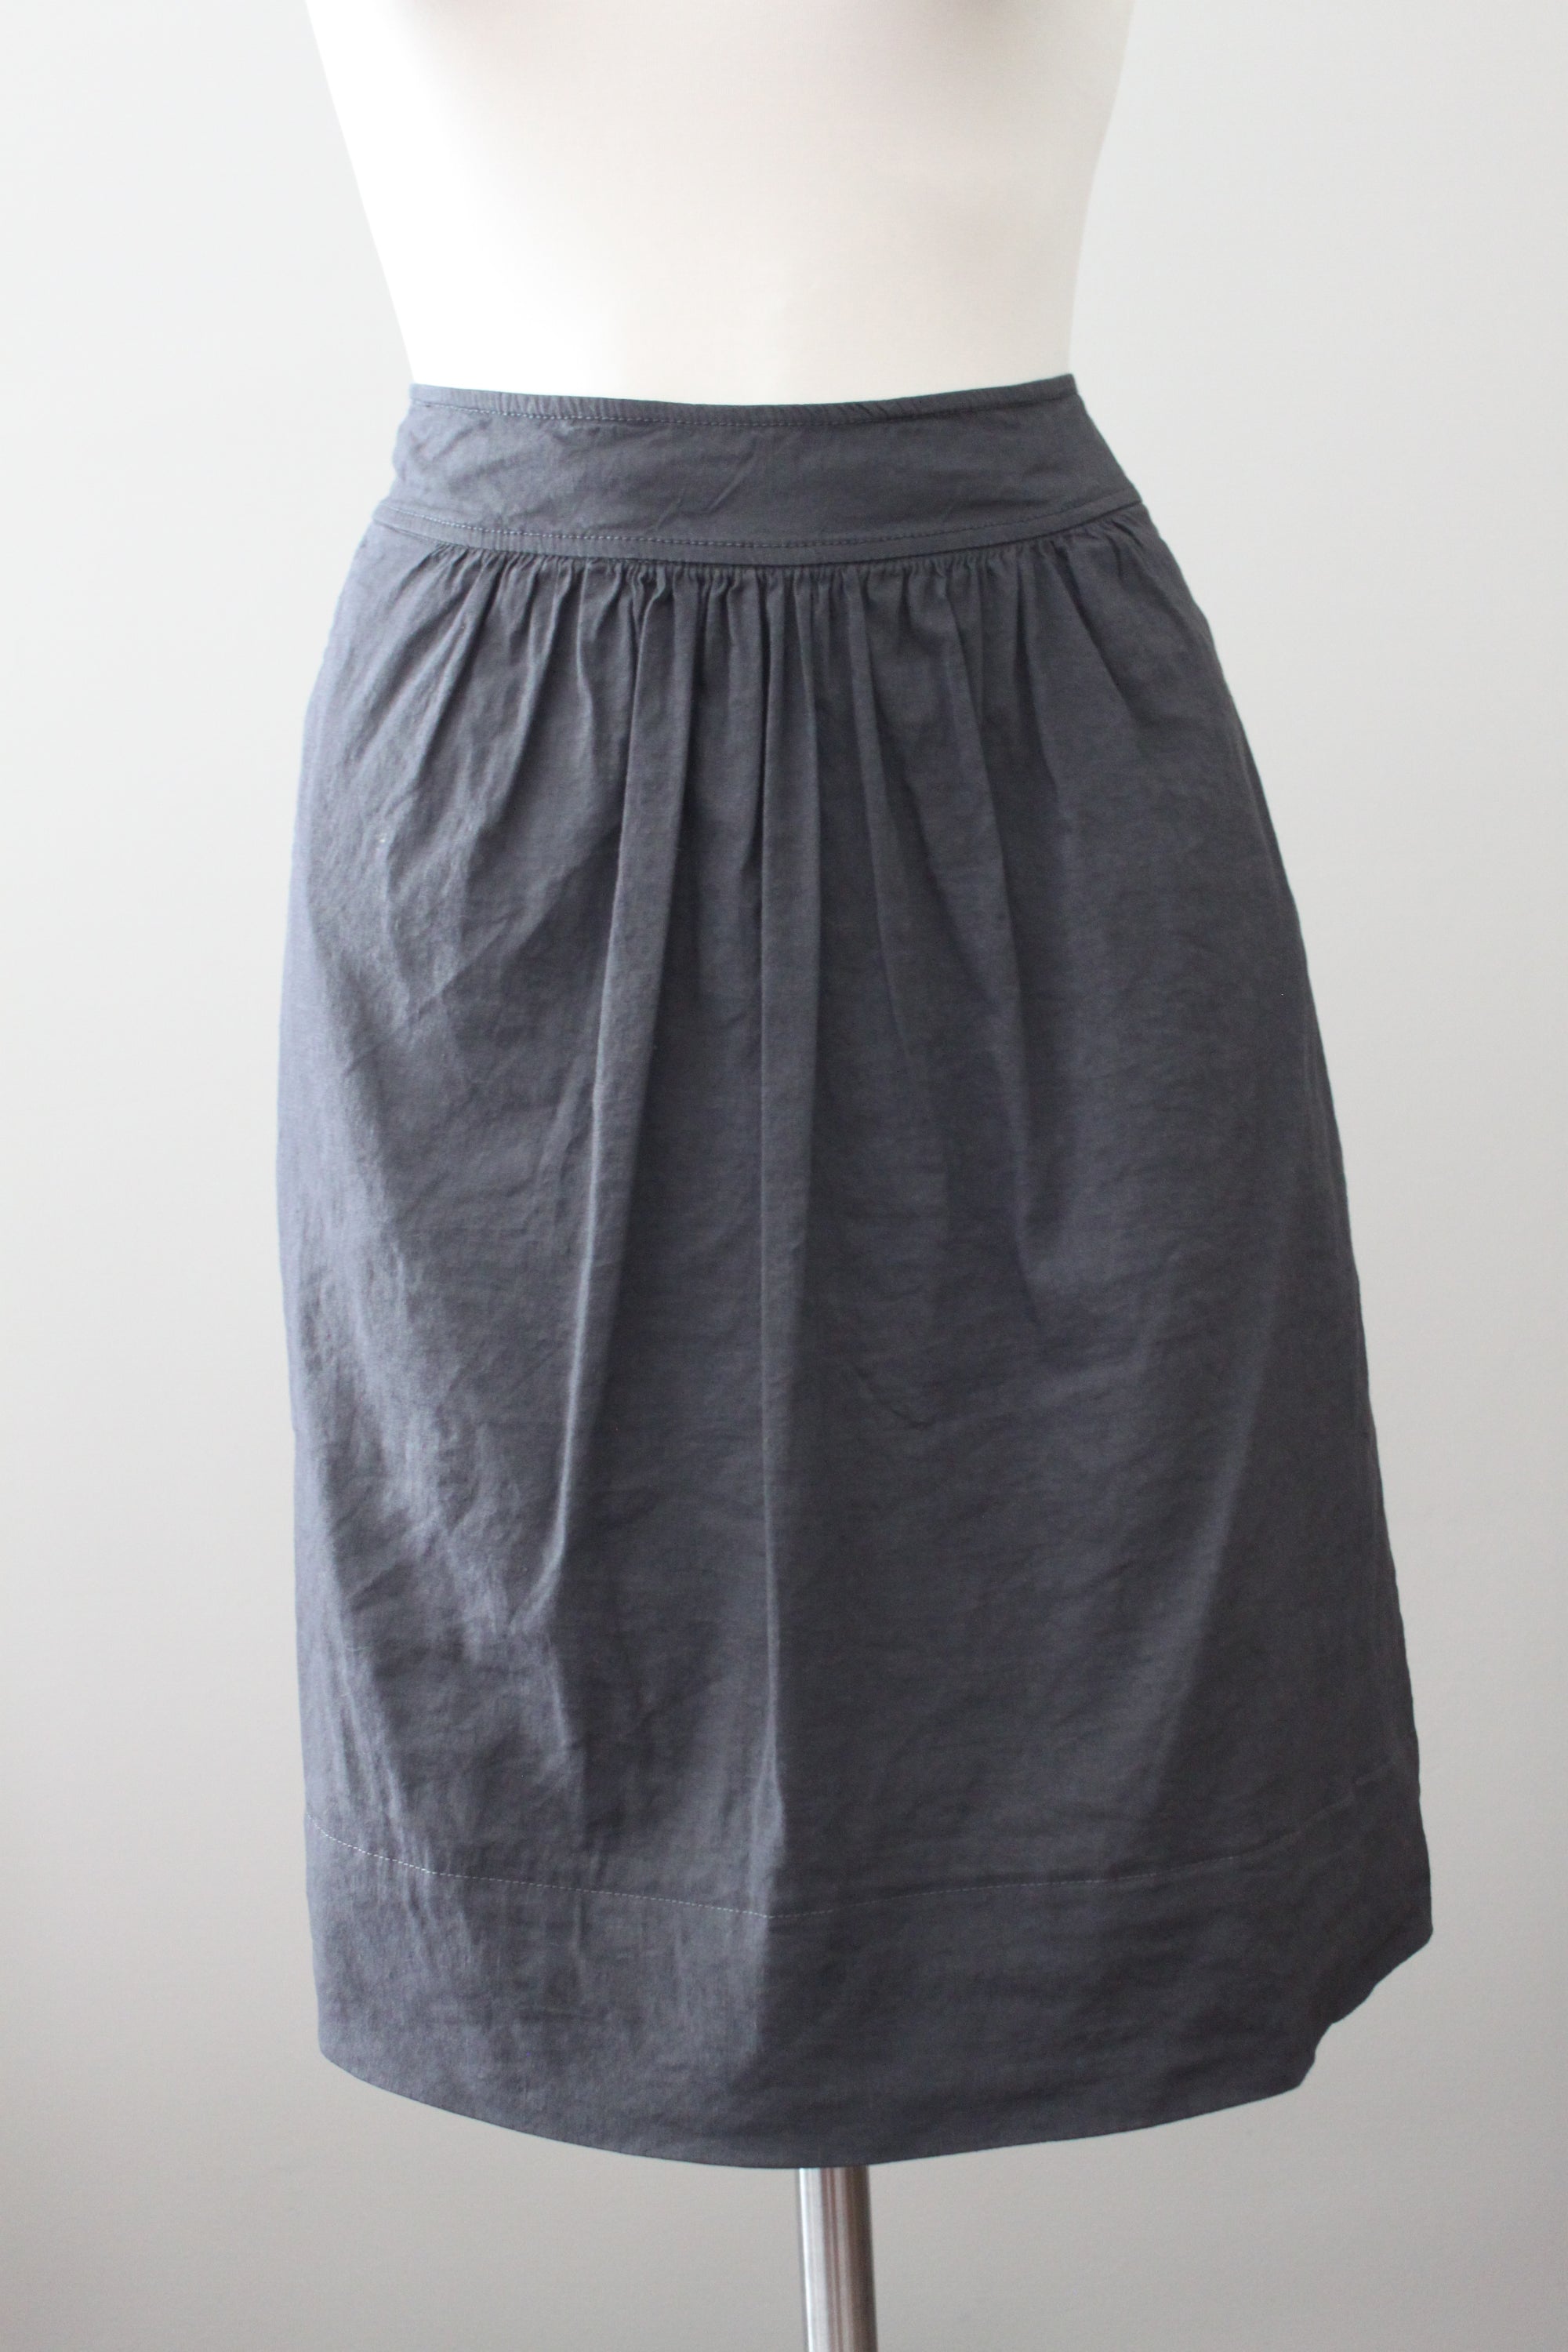 EILEEN FISHER Soft Summer seasonal tone gray linen skirt.